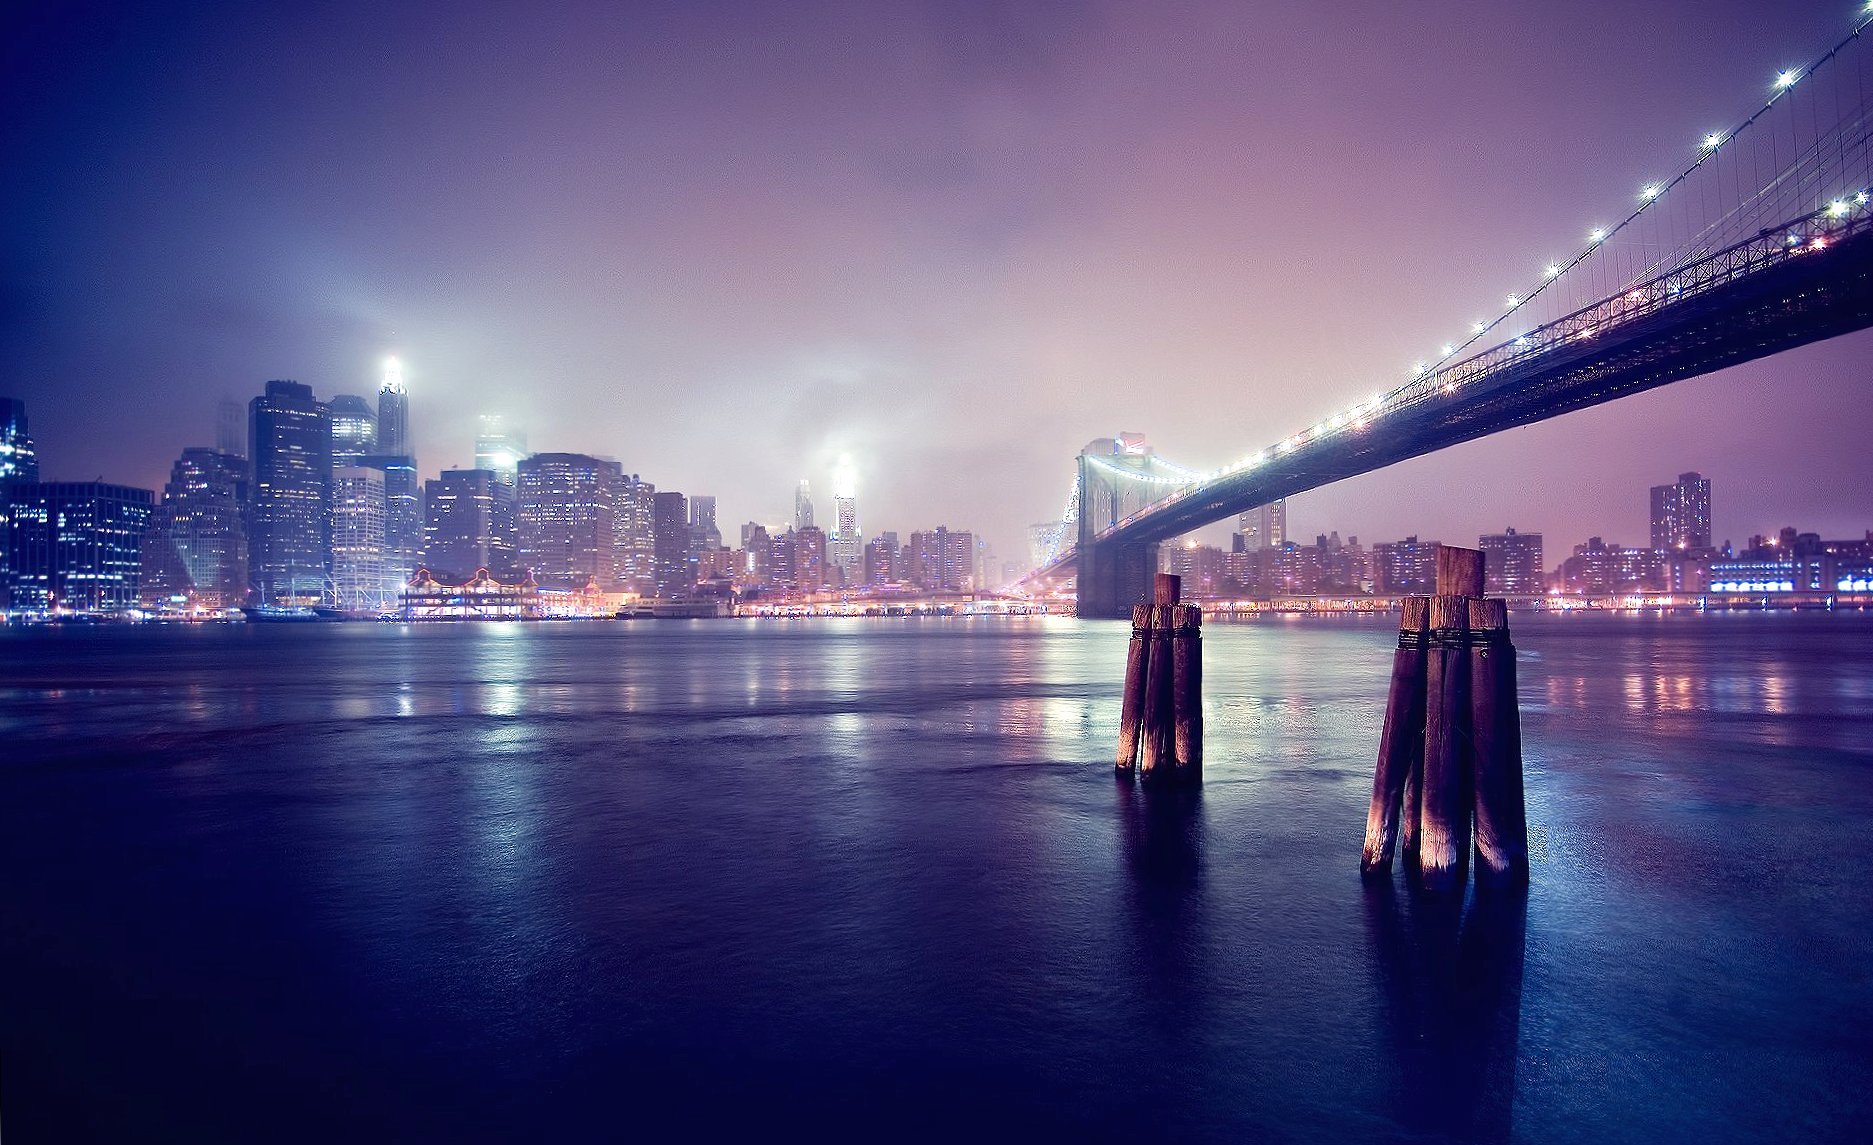 Night brooklyn bridge new york at 750 x 1334 iPhone 6 size wallpapers HD quality